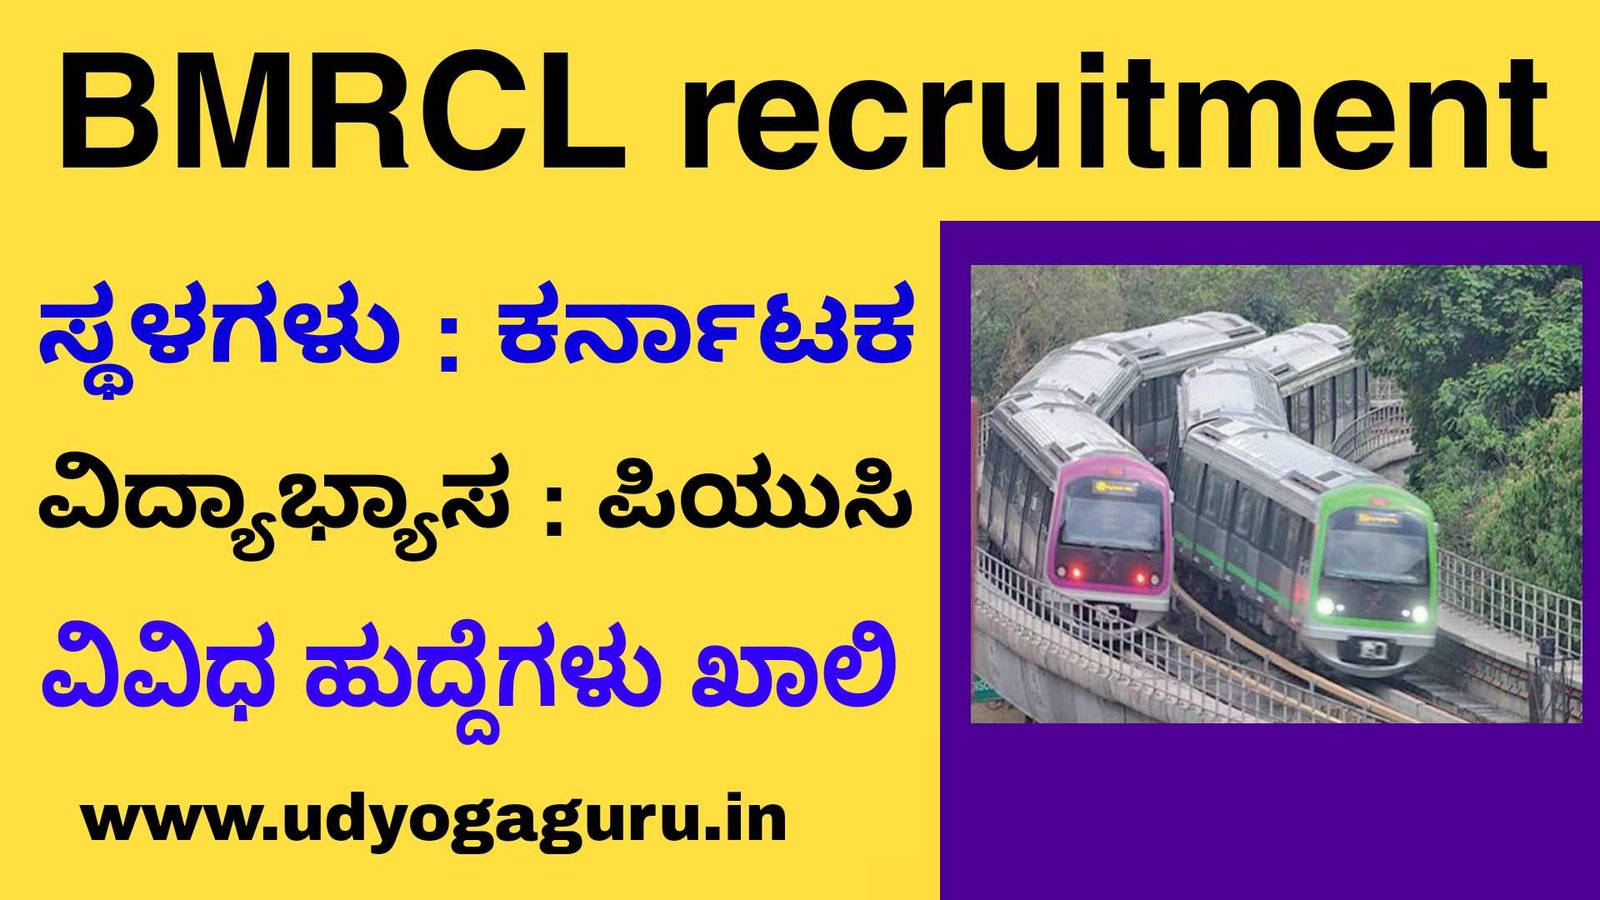 BMRCL recruitment - ಬೆಂಗಳೂರು ಮೆಟ್ರೋ ನೇಮಕಾತಿ